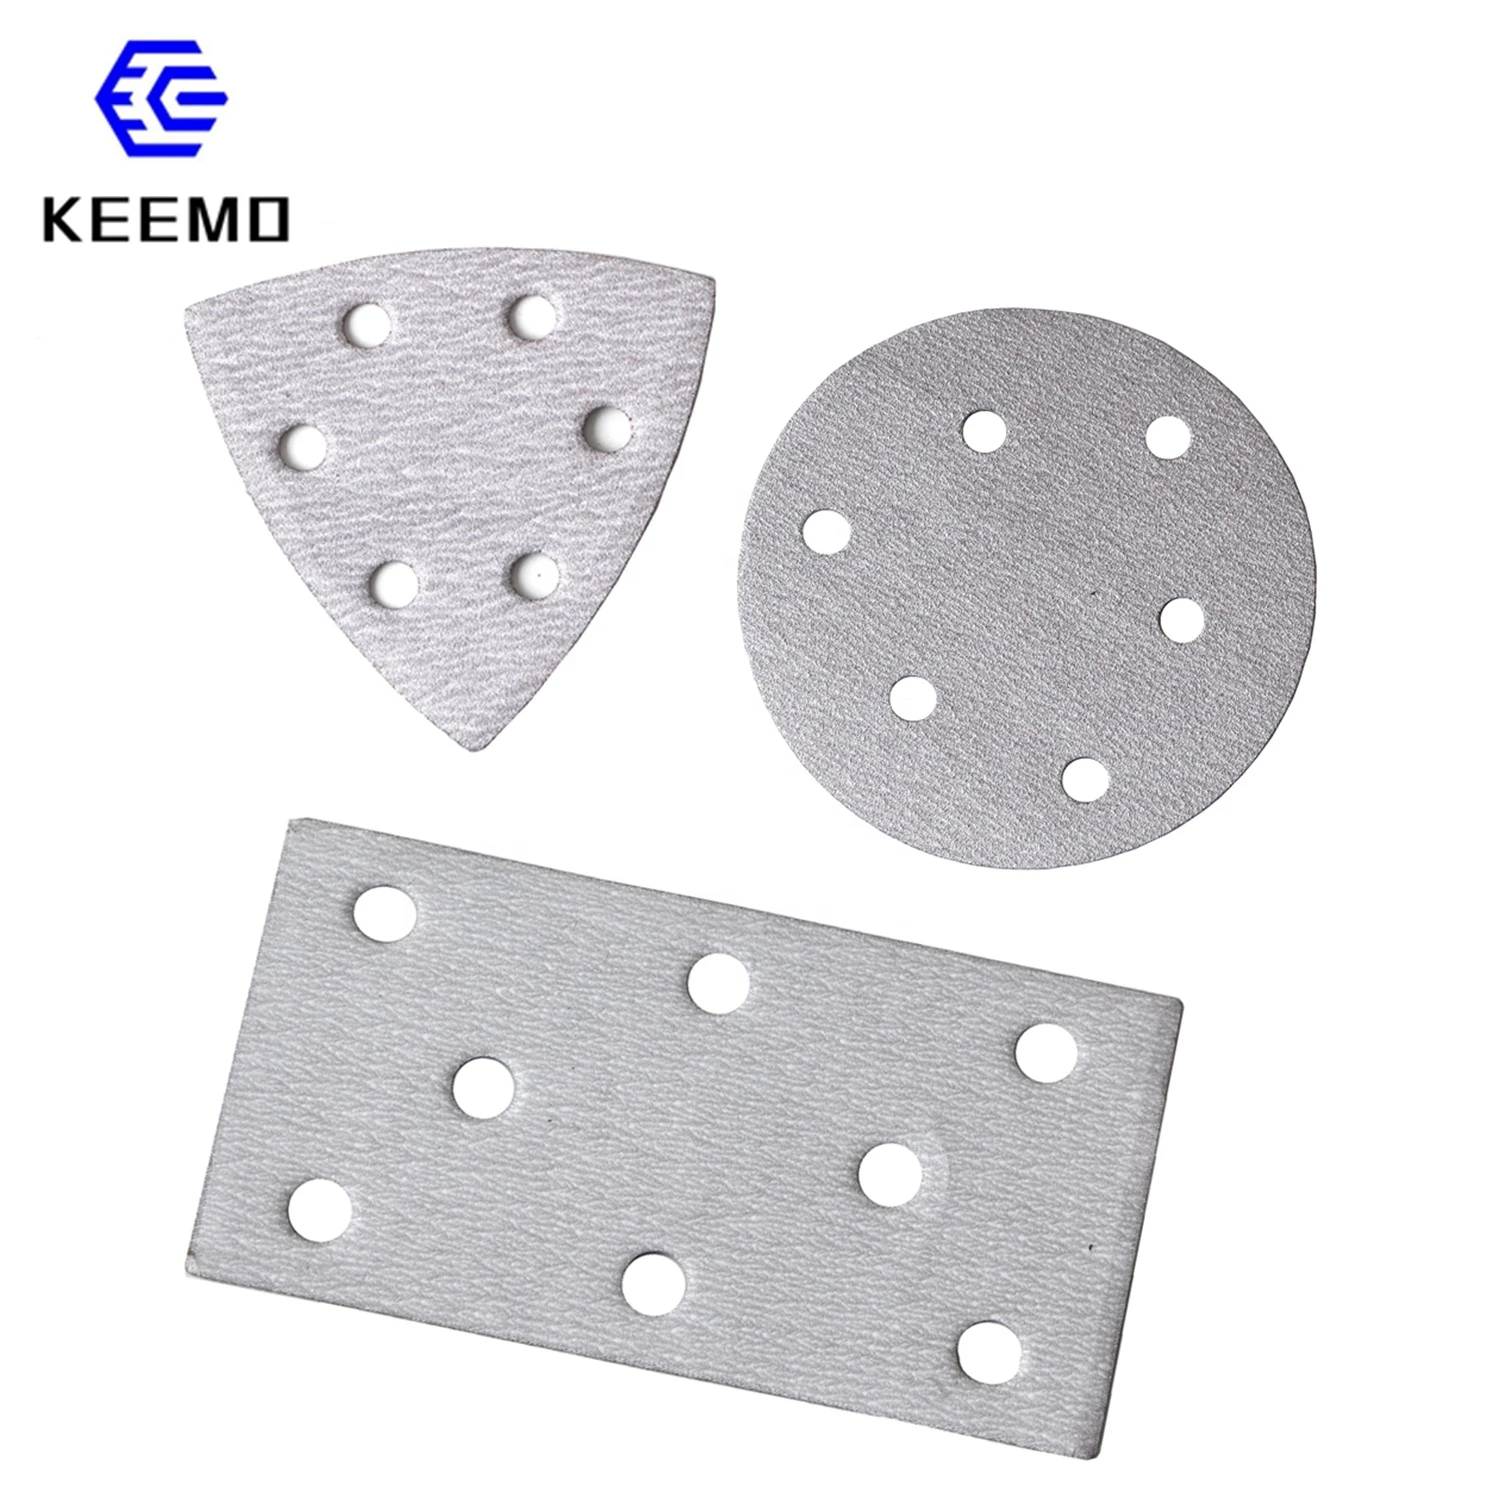 KEEMO Sanding Discs 600 Grit Aluminum Oxide Sander Paper 125mm White Automotive Sandpaper Abrasive Disc 125MM 5inch OEM